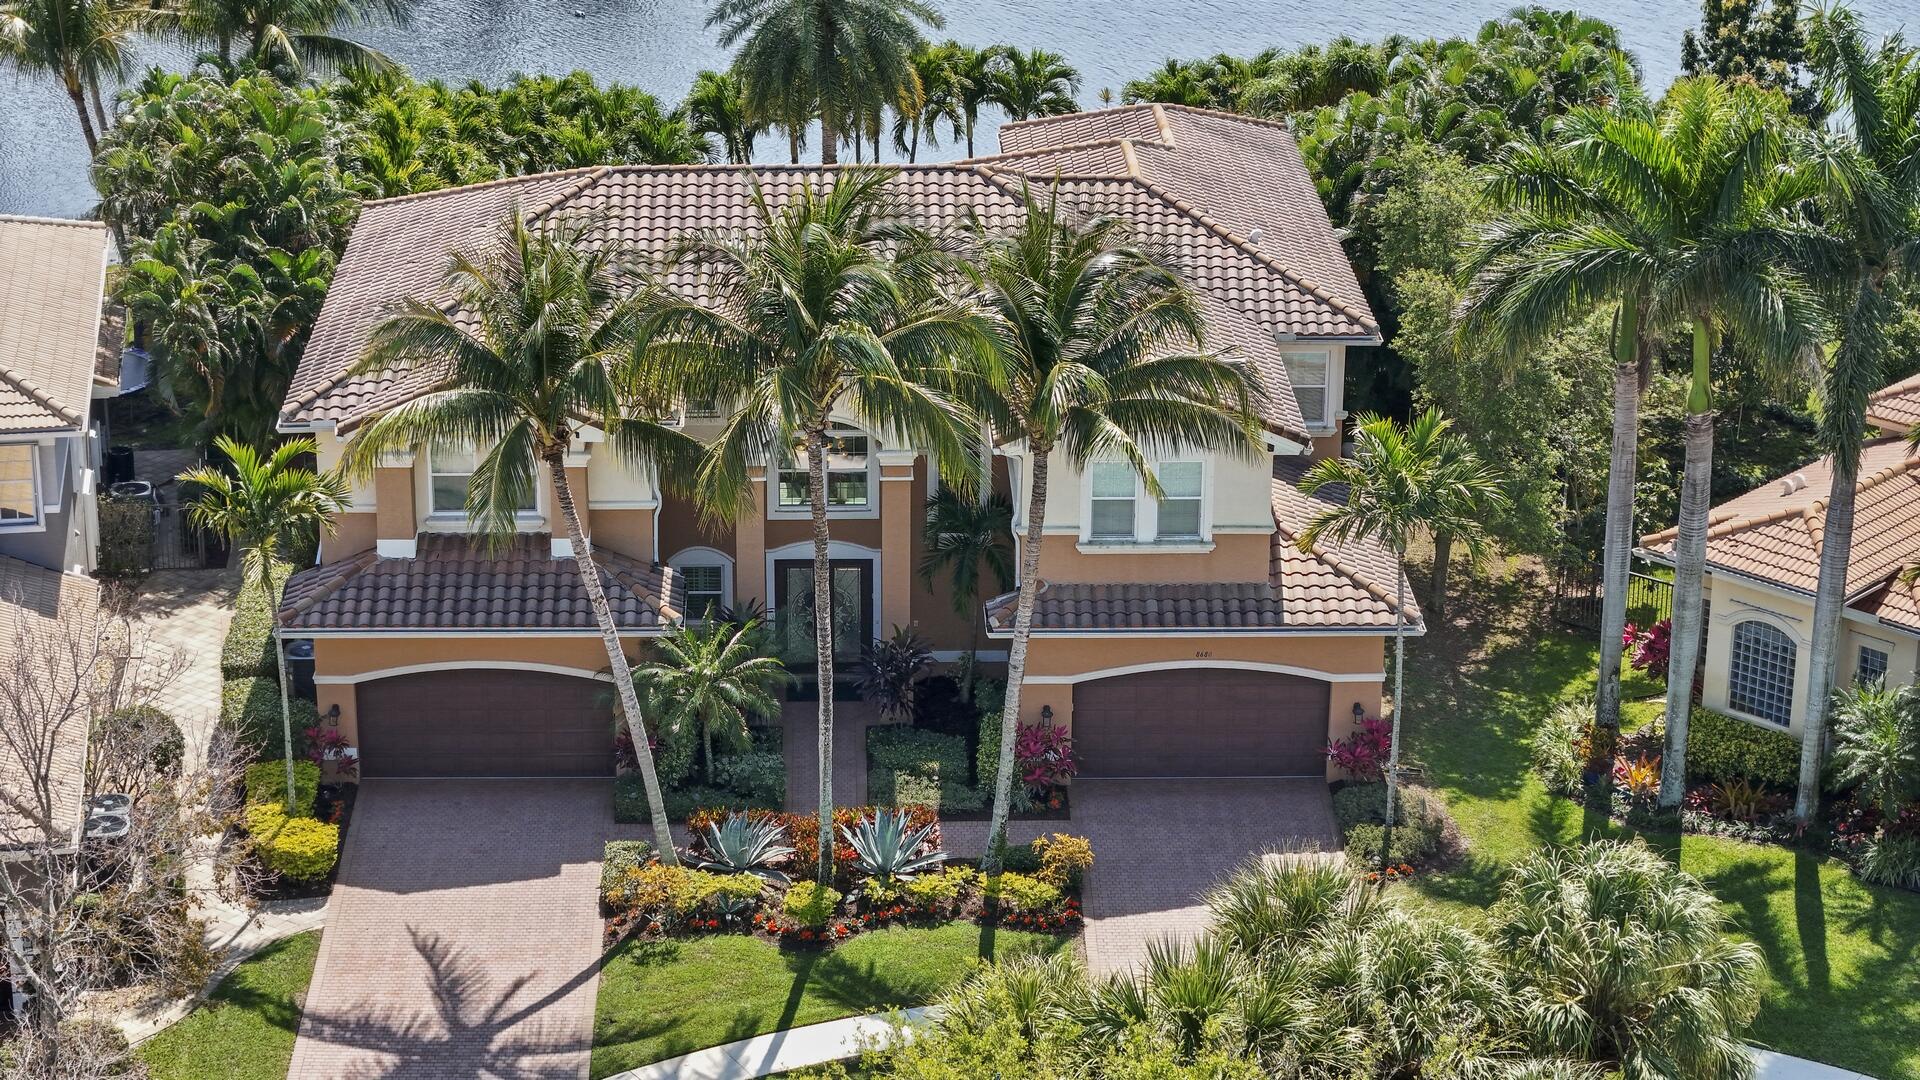 Property for Sale at 8680 Daystar Ridge Point, Boynton Beach, Palm Beach County, Florida - Bedrooms: 6 
Bathrooms: 4.5  - $1,600,000